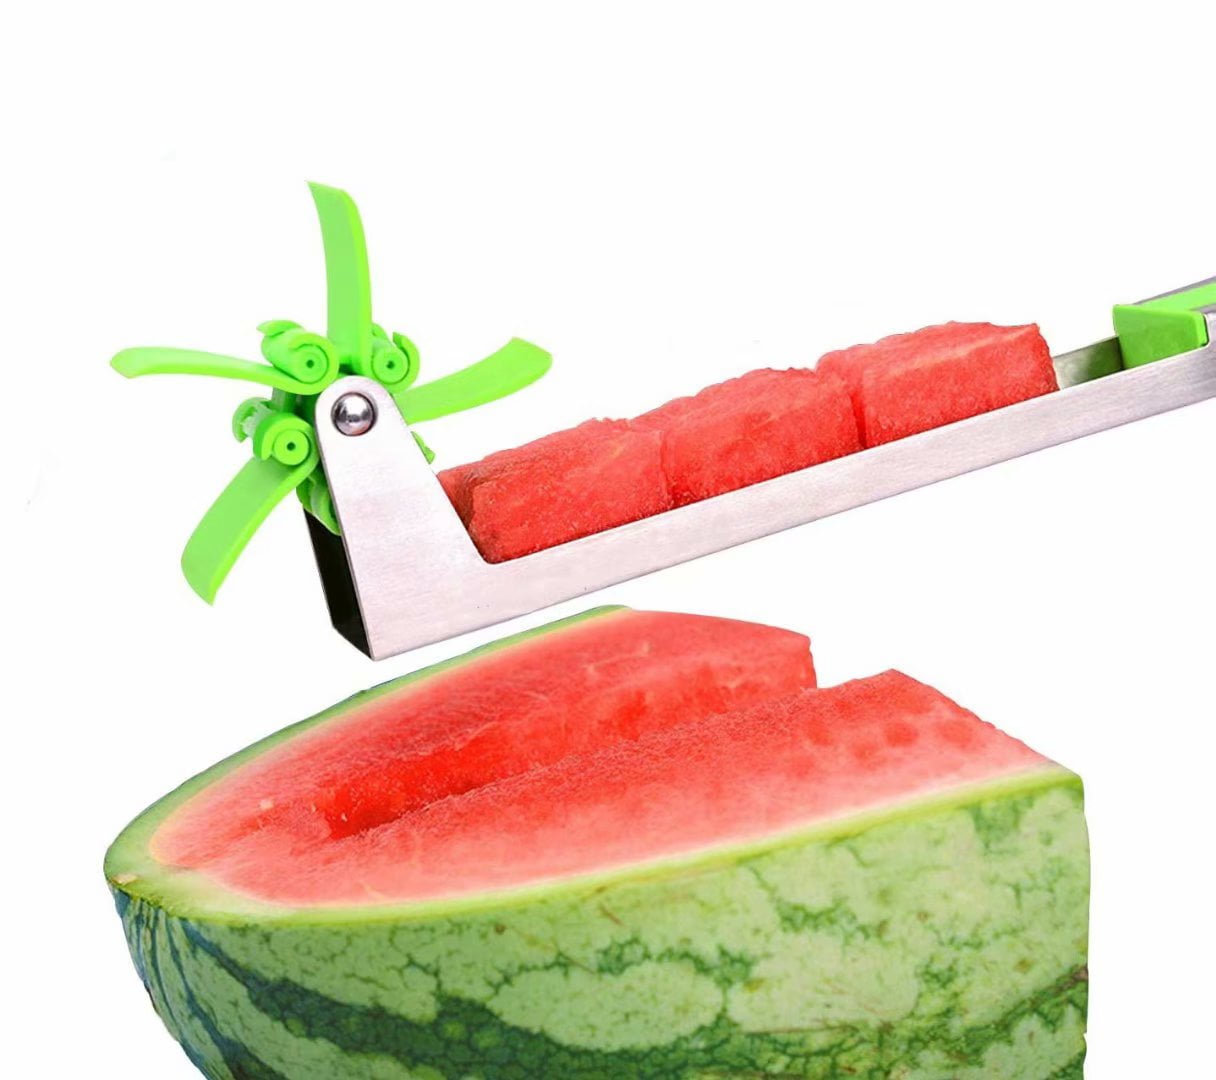 Watermelon slicer cutter Windmill Auto Stainless Steel Melon Cuber Knife  Corer Fruit Vegetable Tools Kitchen Gadgets (Green) - Walmart.com